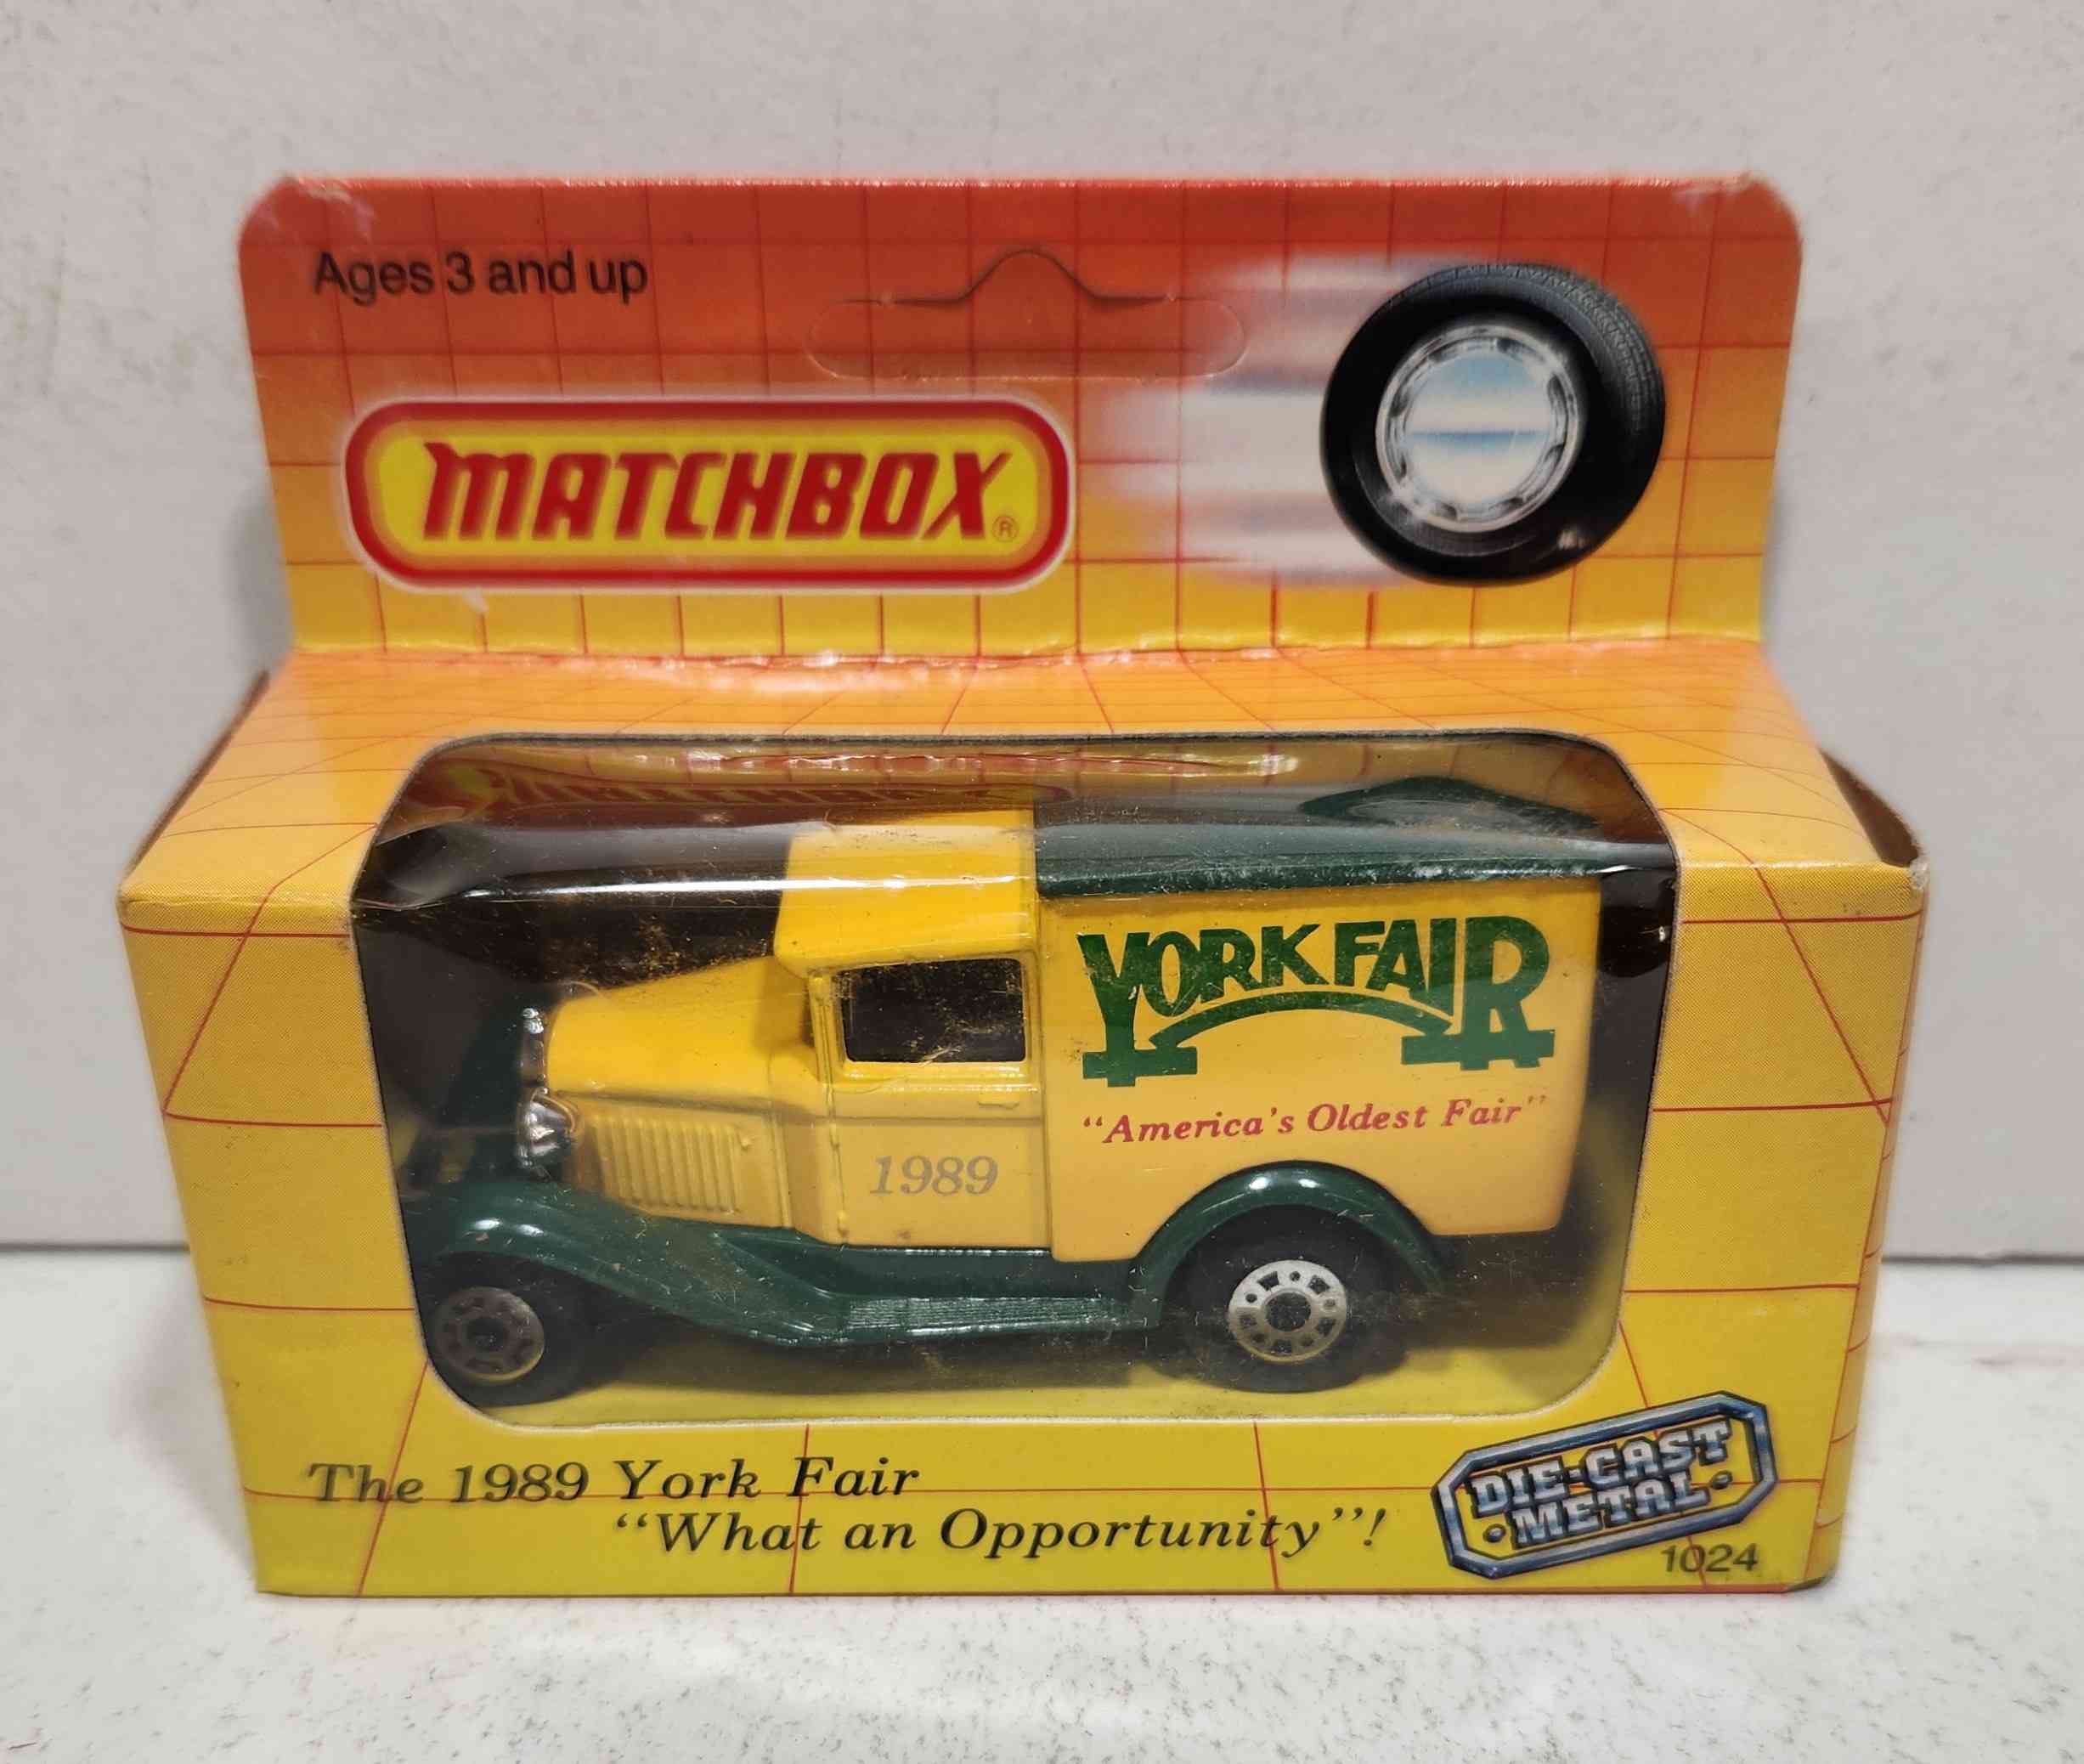 1989 York Fair 1/55th "America's Oldest Fair" Old Time Box Truck